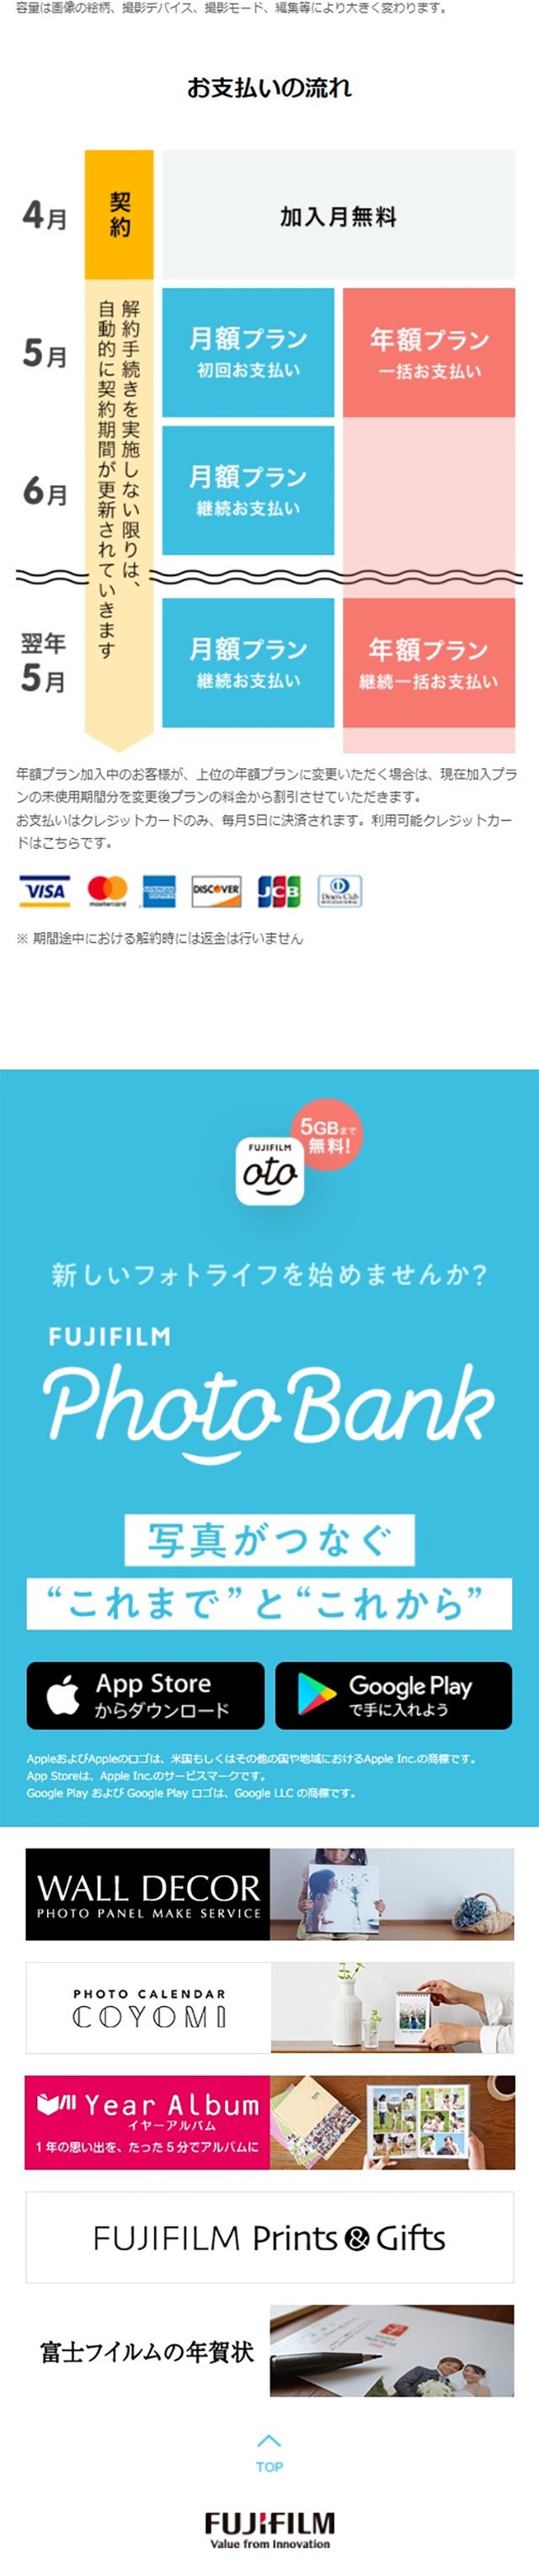 PhotoBank_sp_2